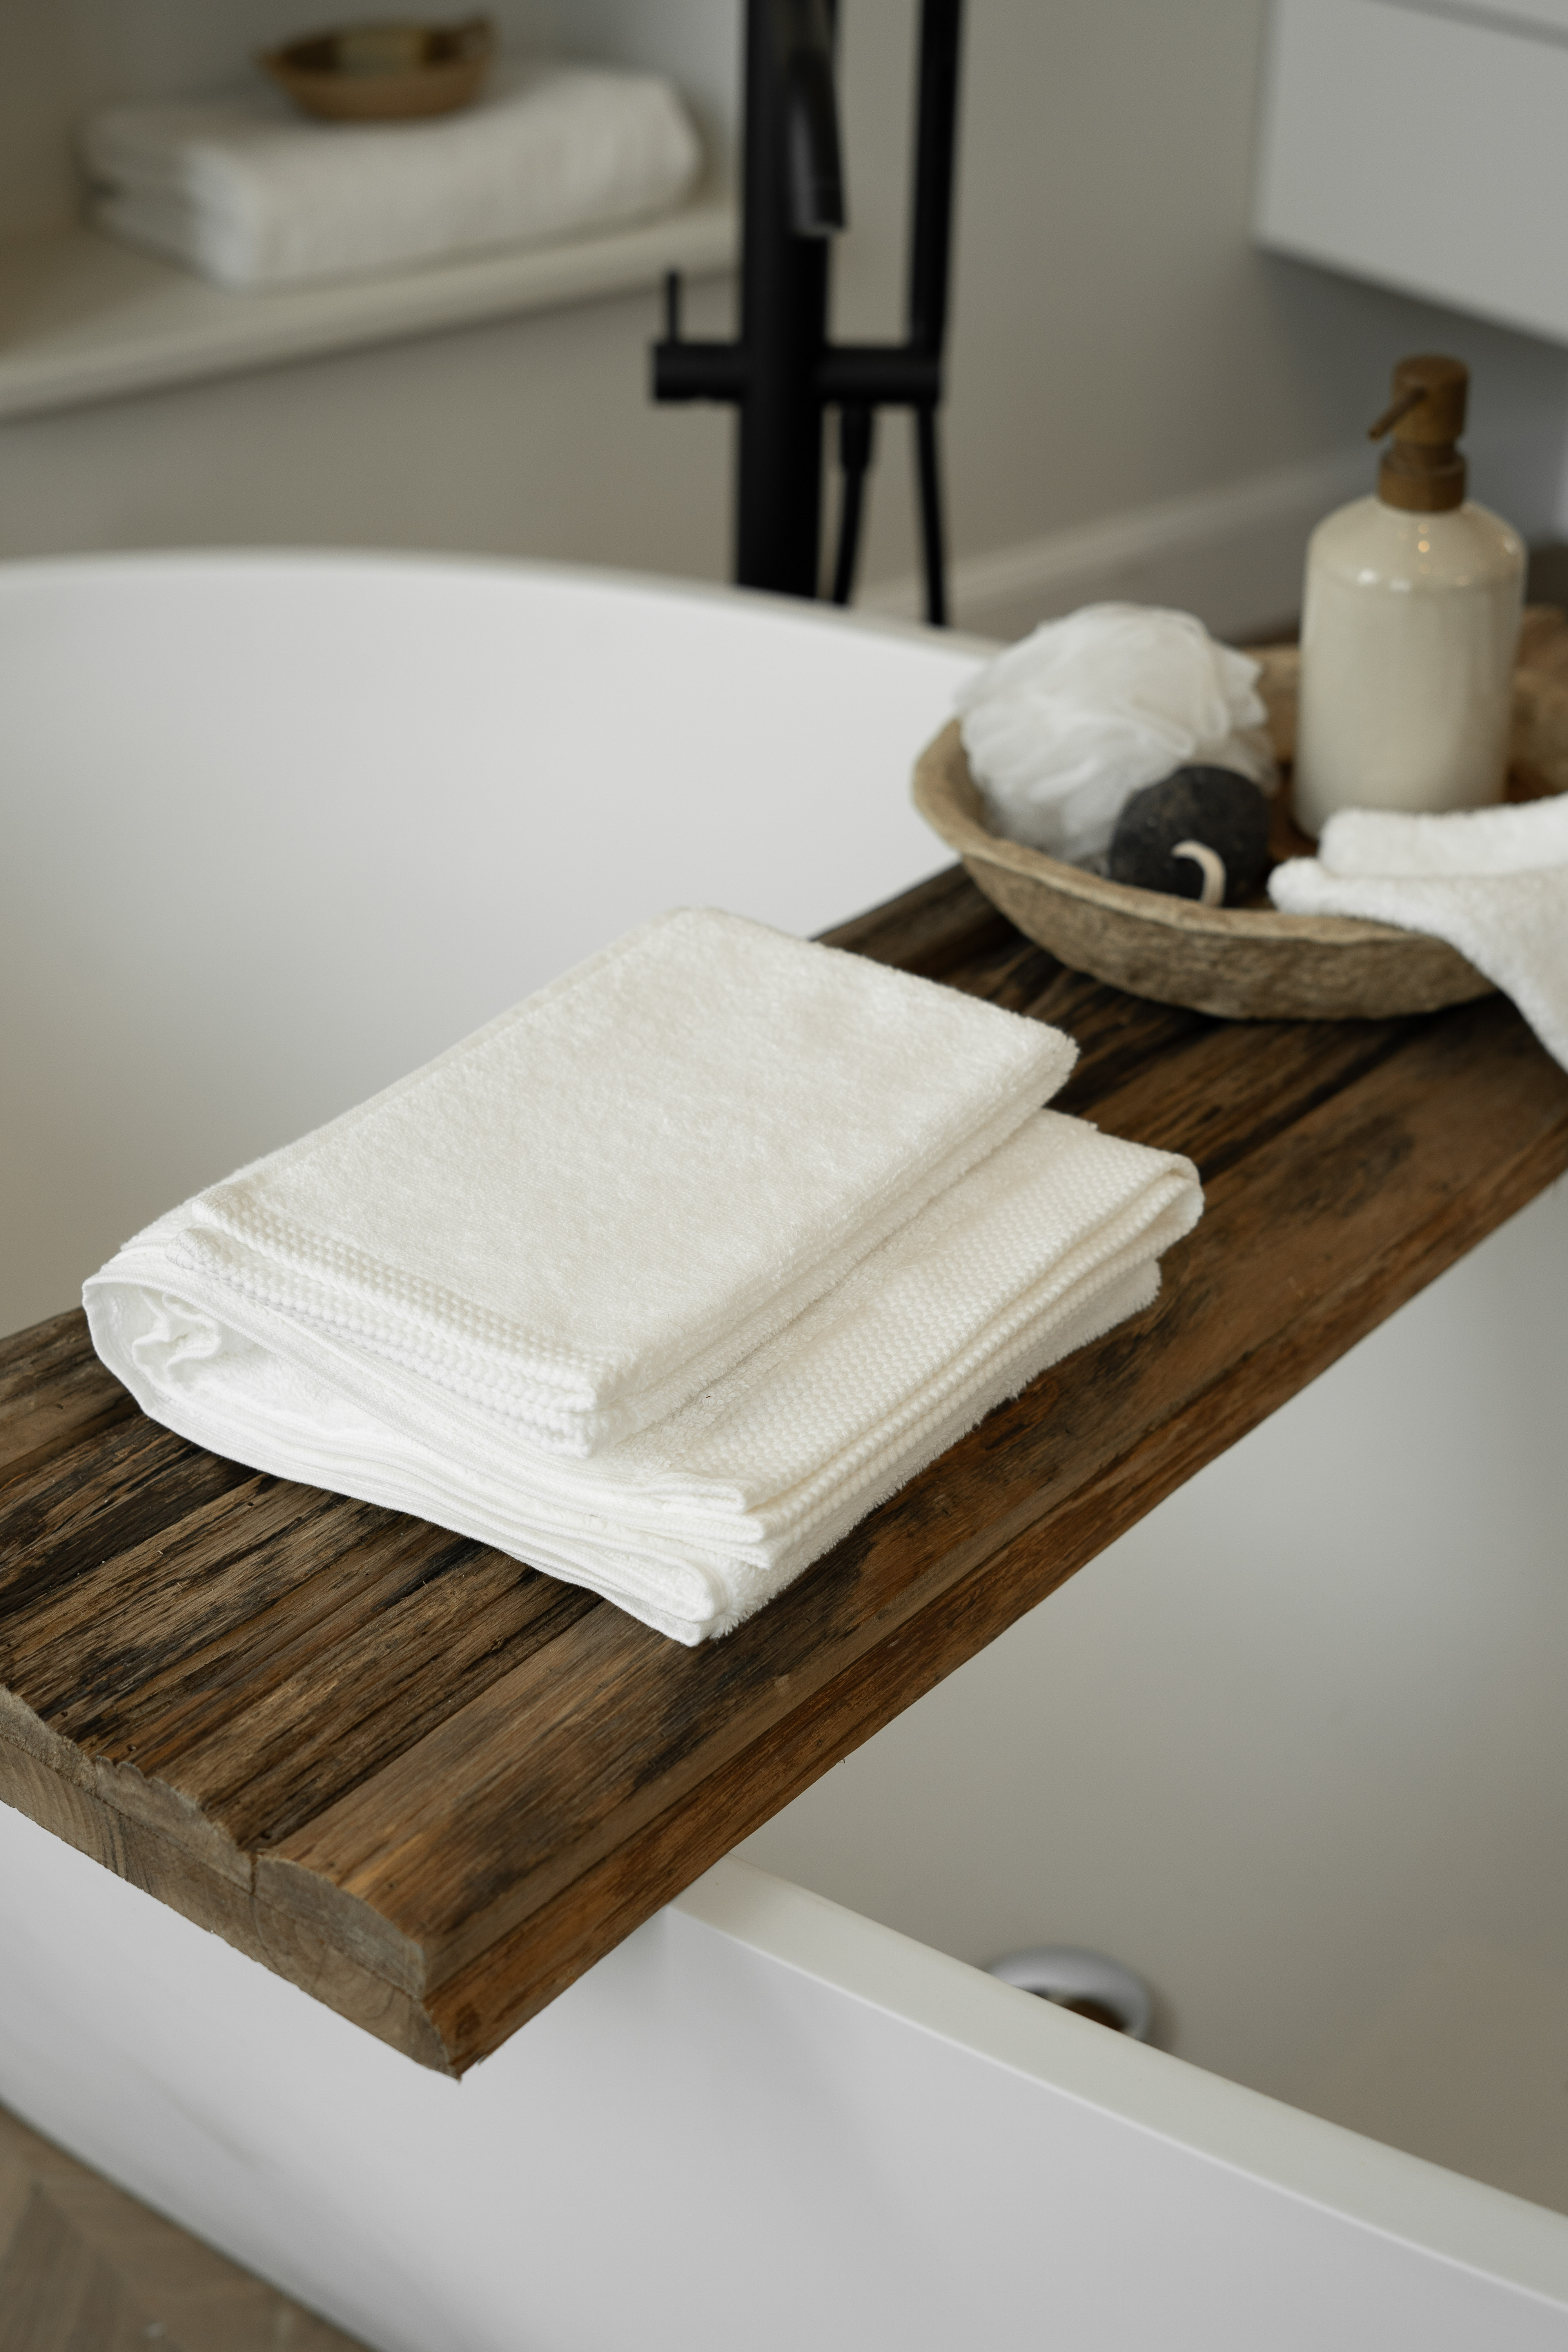 Bath towel DELUX 50x100cm, red